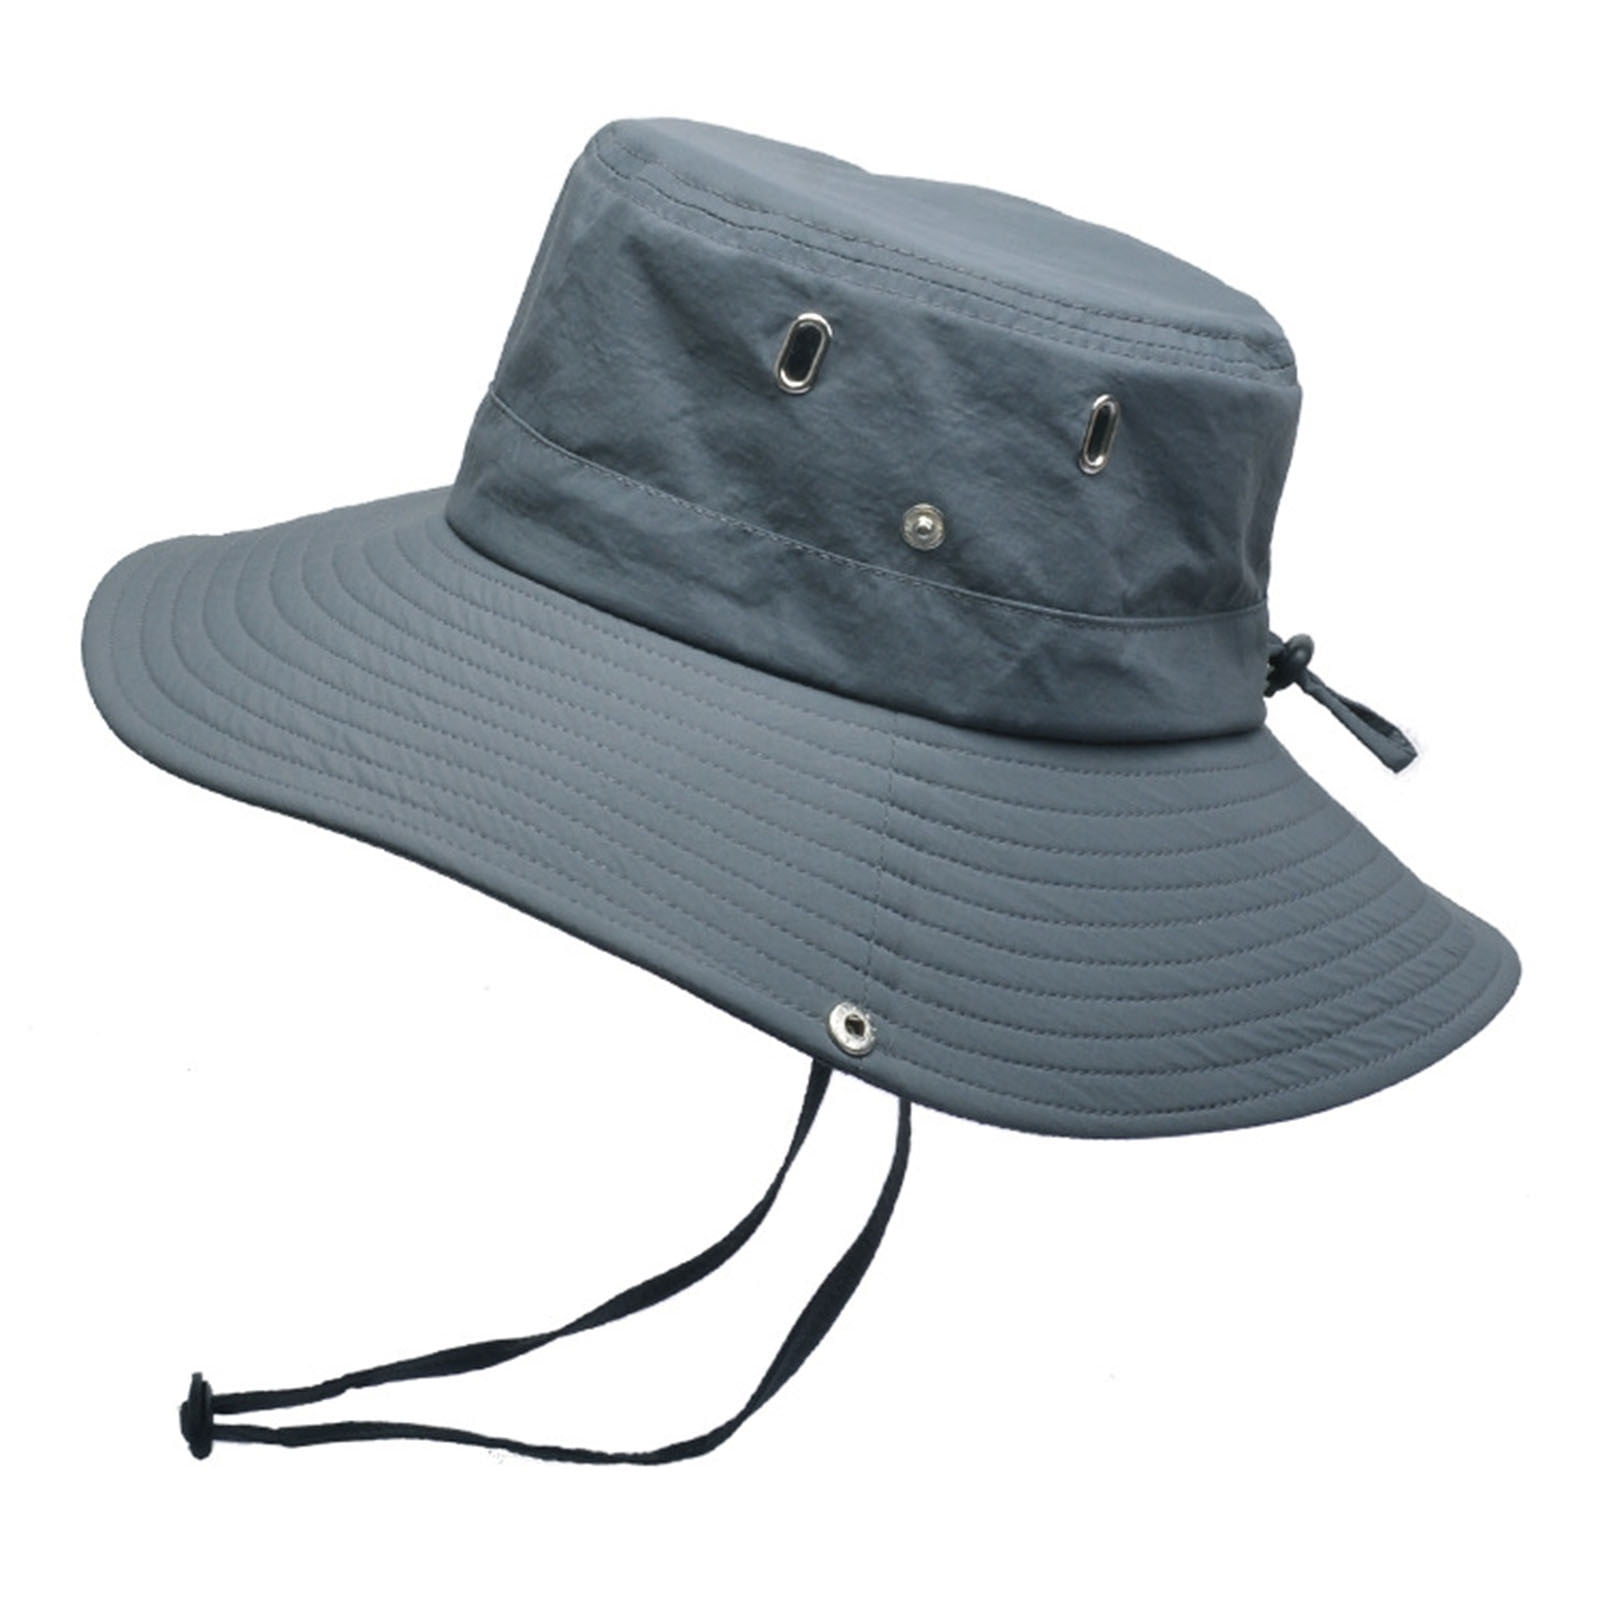 Ballsfhk Sun Hat for Men Solid Colour Breathable Wide Brim Bucket Hat Sun Hat for Fishing Hiking Garden Safari Beach, Men's, Size: One size, Blue